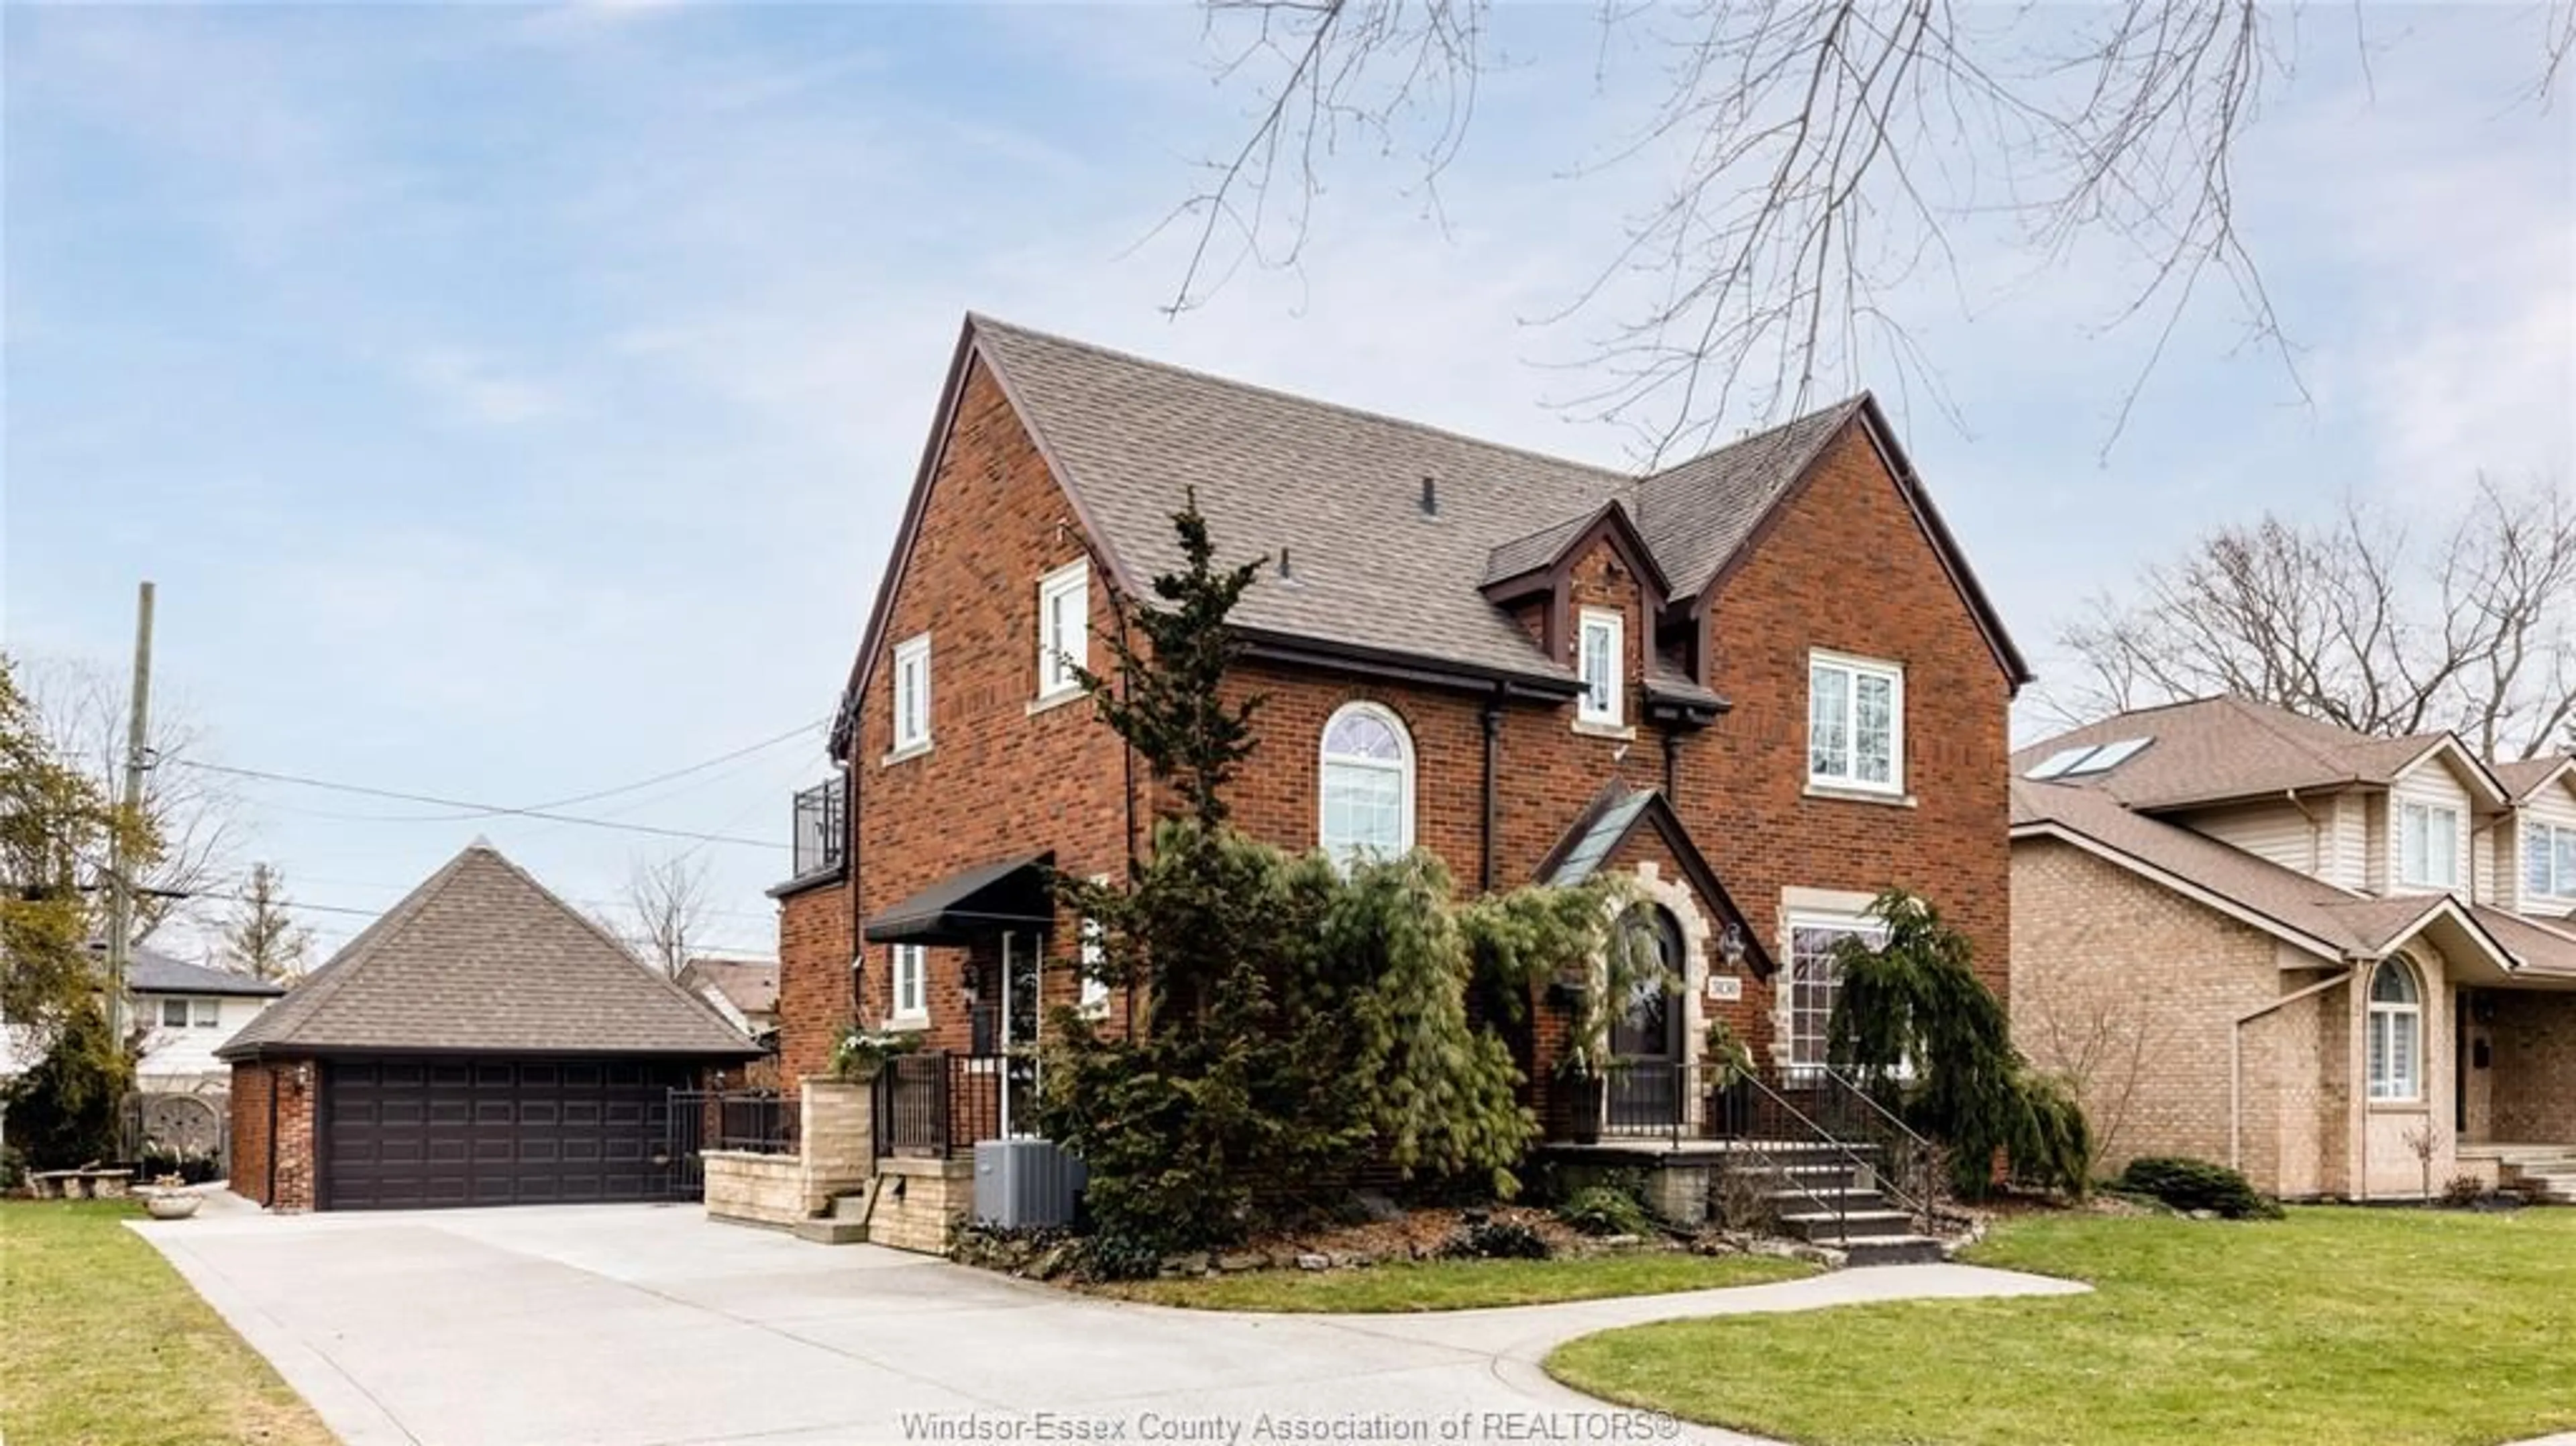 Home with brick exterior material for 3130 CALIFORNIA, Windsor Ontario N9E 3K6